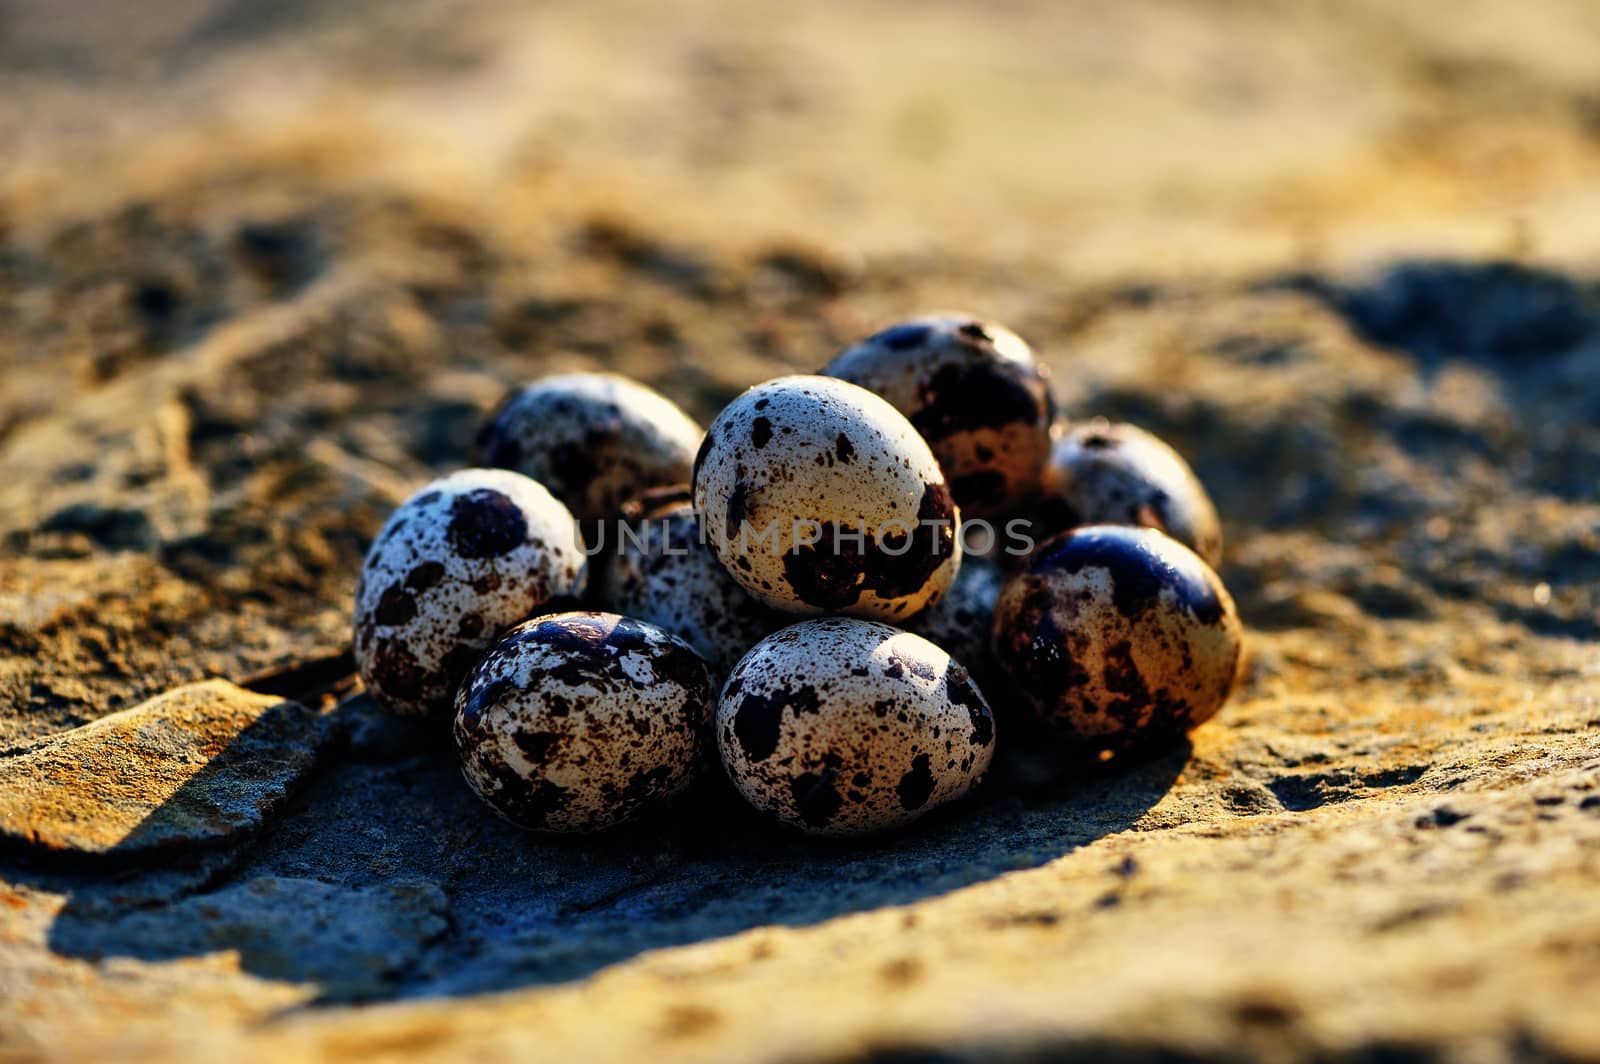 Quail eggs on the stone by styf22